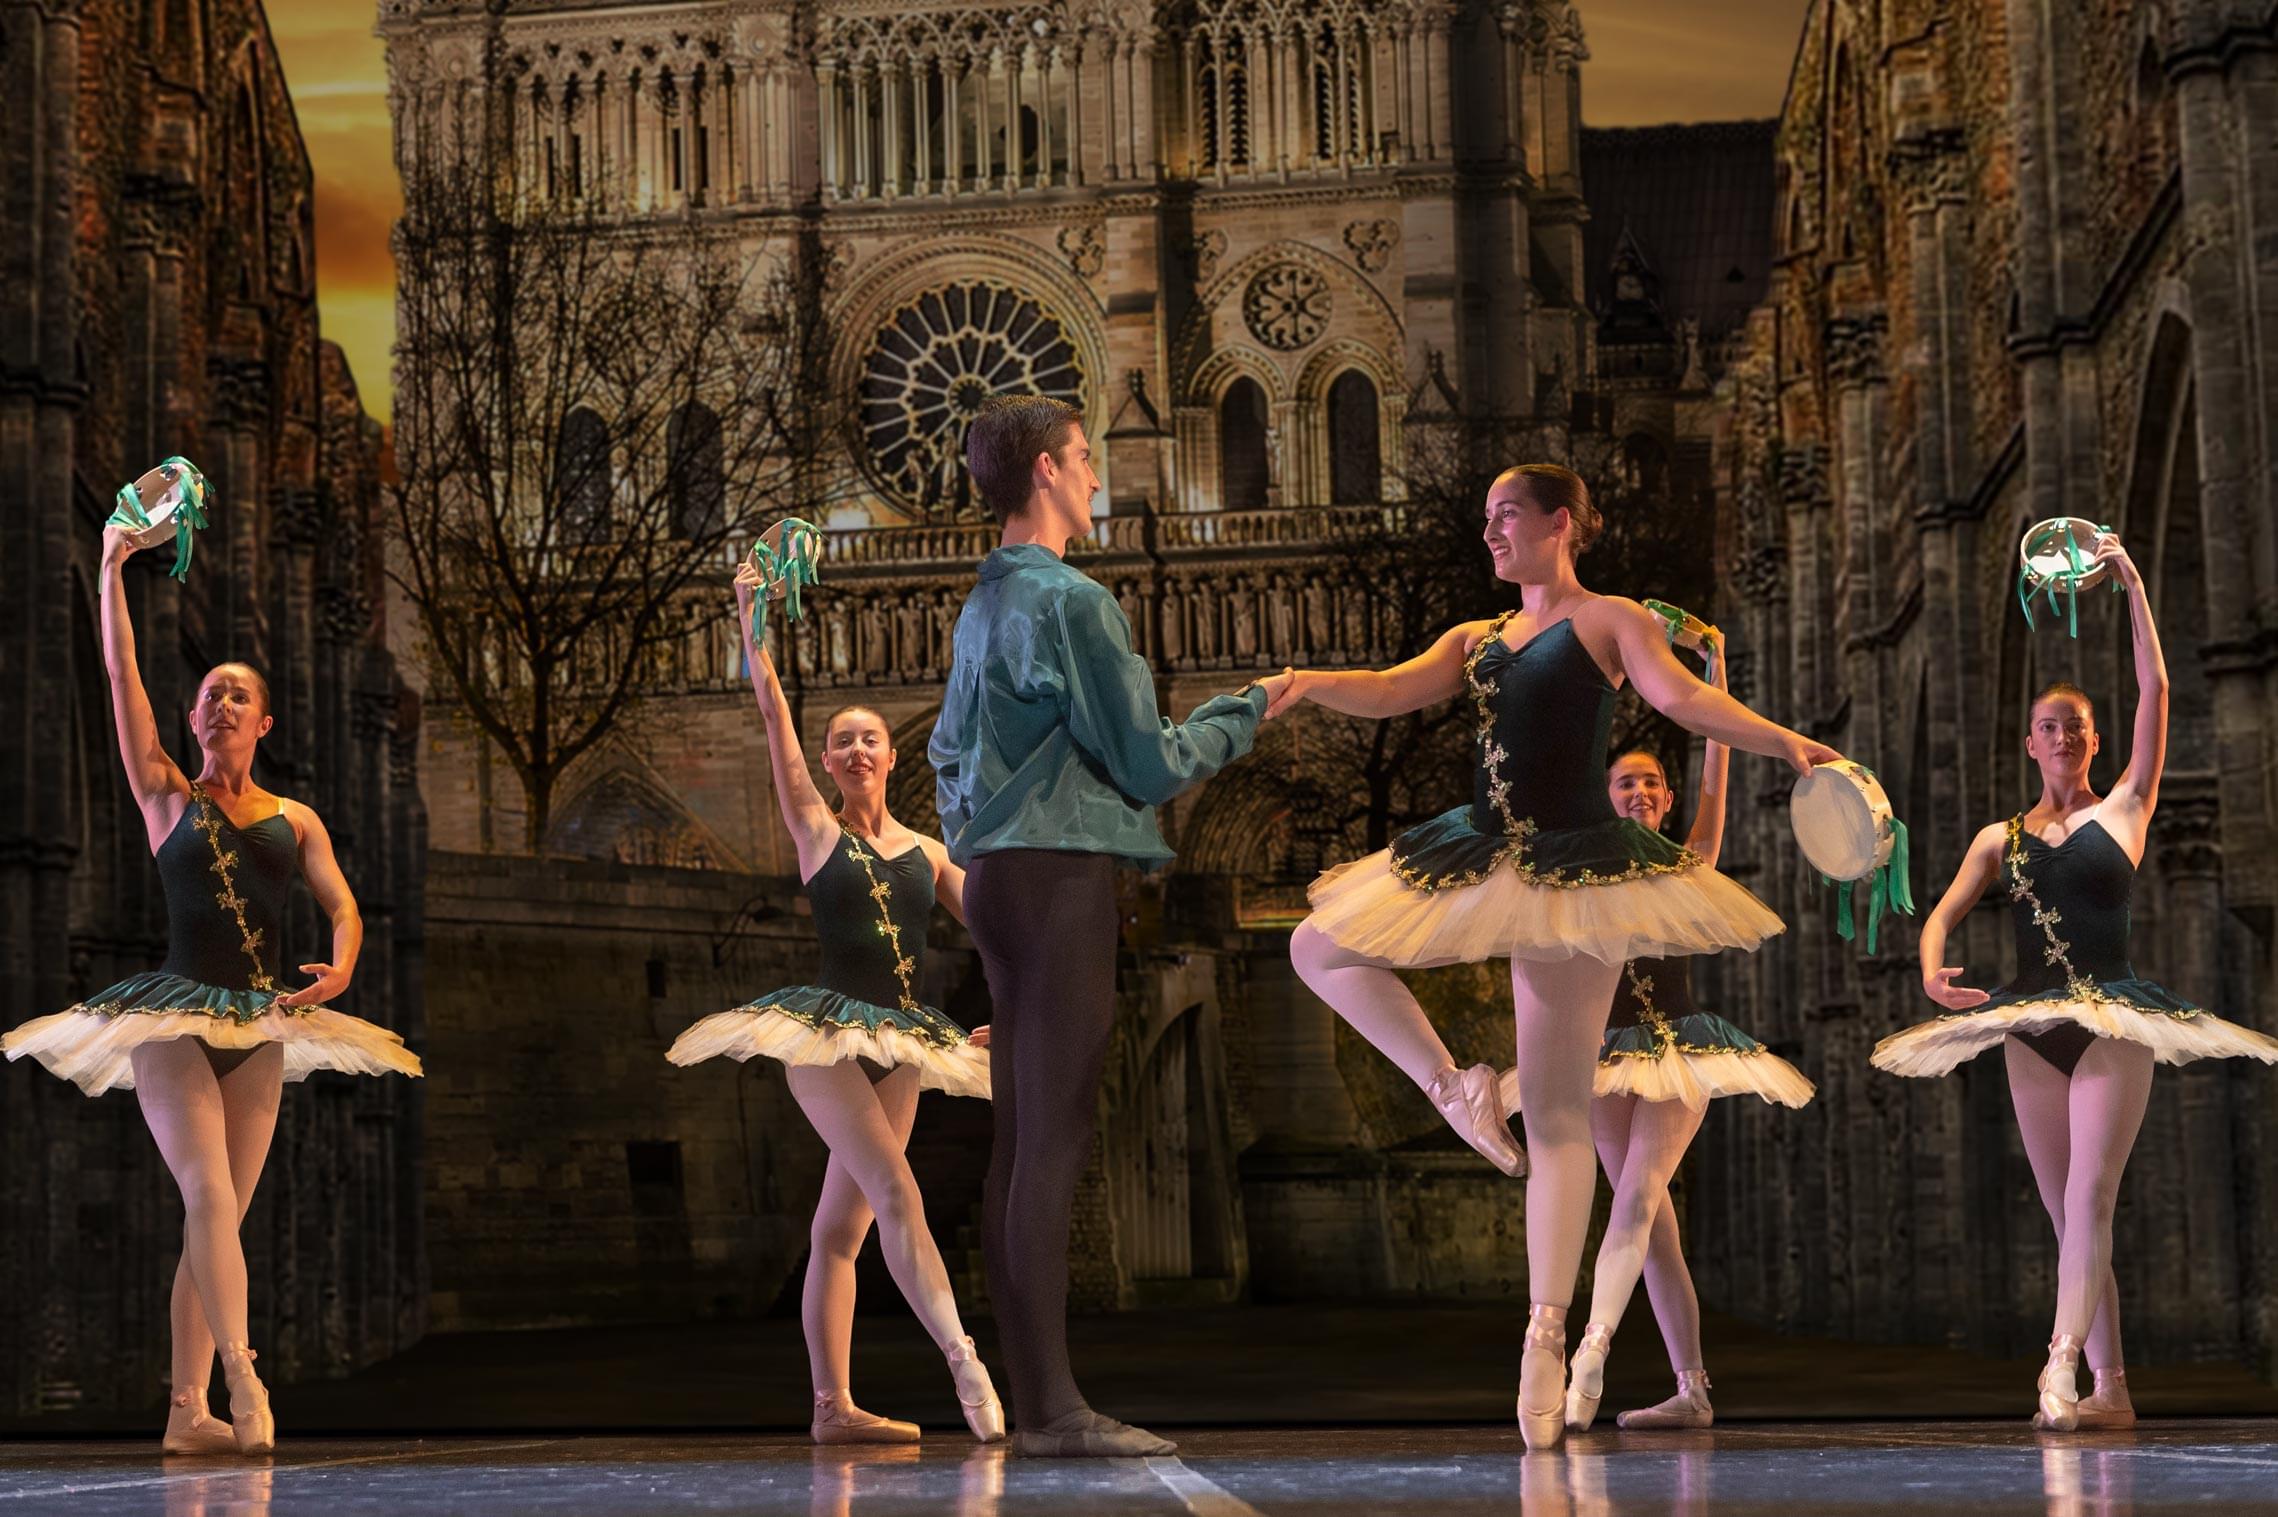 Escuela Ballet Anne Markoartu. Esmeralda